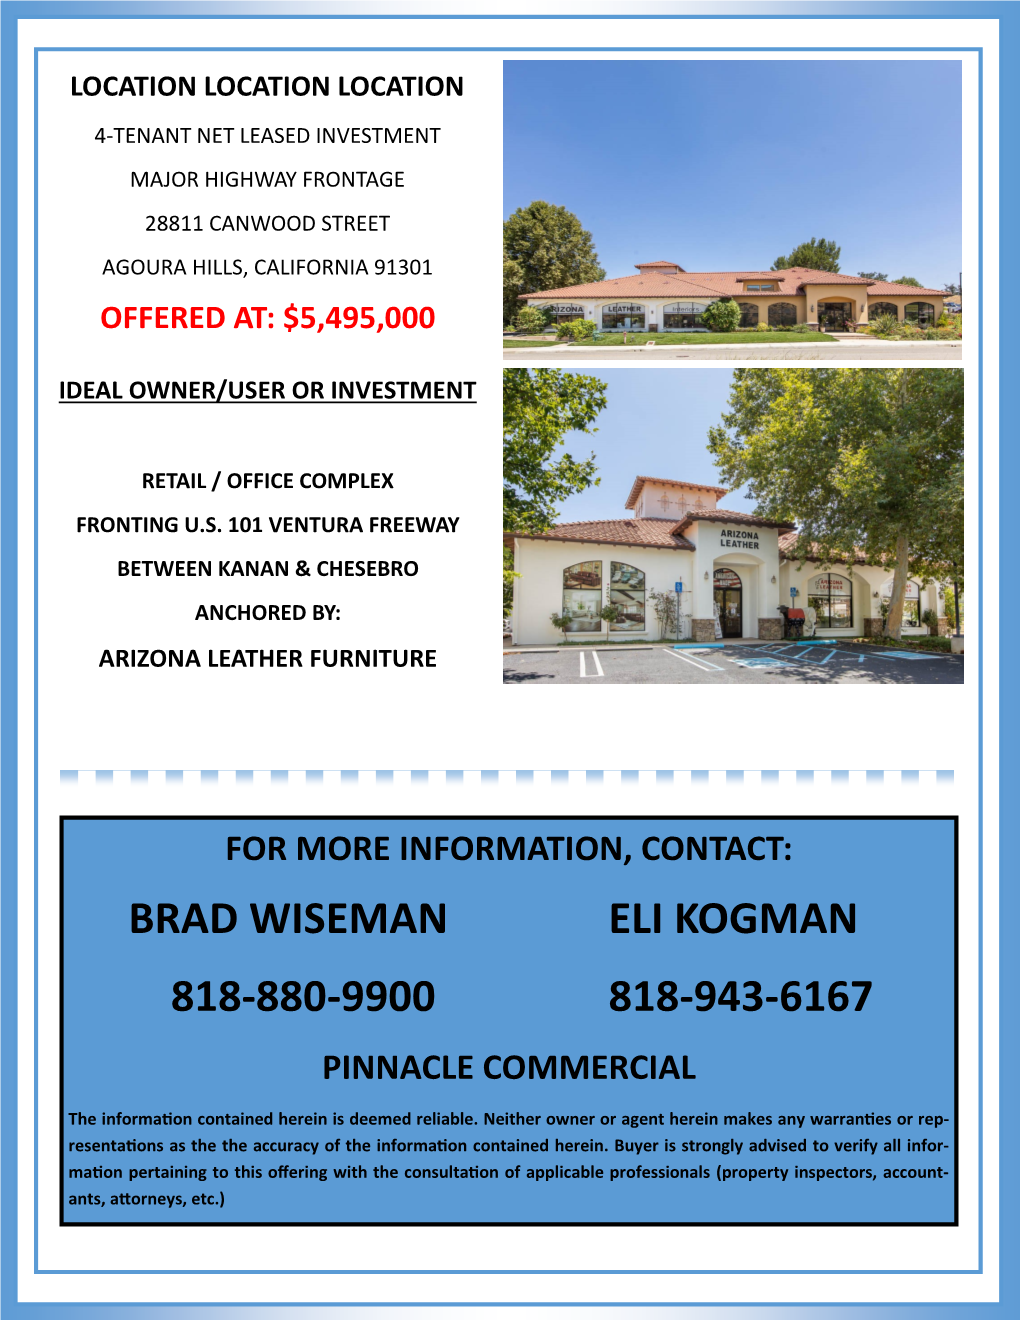 Brad Wiseman Eli Kogman 818-880-9900 818-943-6167 Pinnacle Commercial